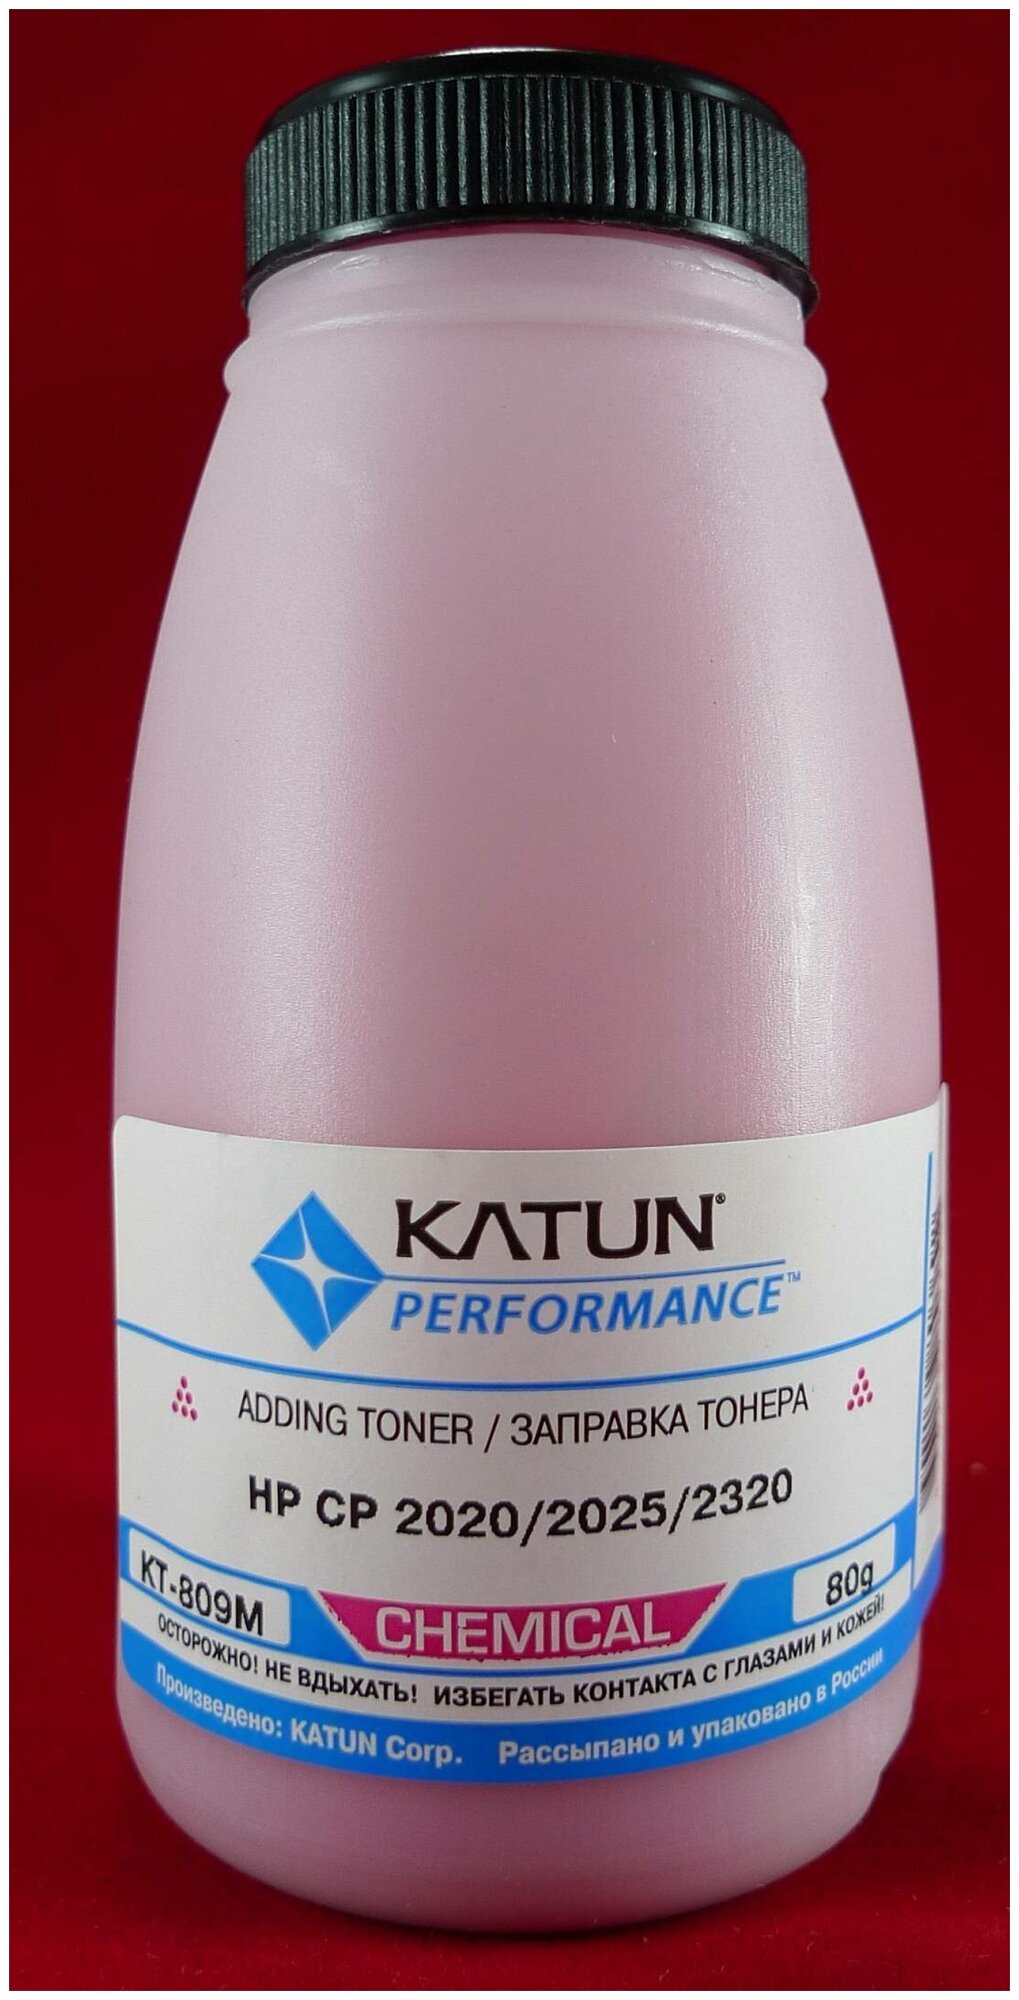 Katun KT-809M тонер (HP 304A) пурпурный 80 гр (совместимый)